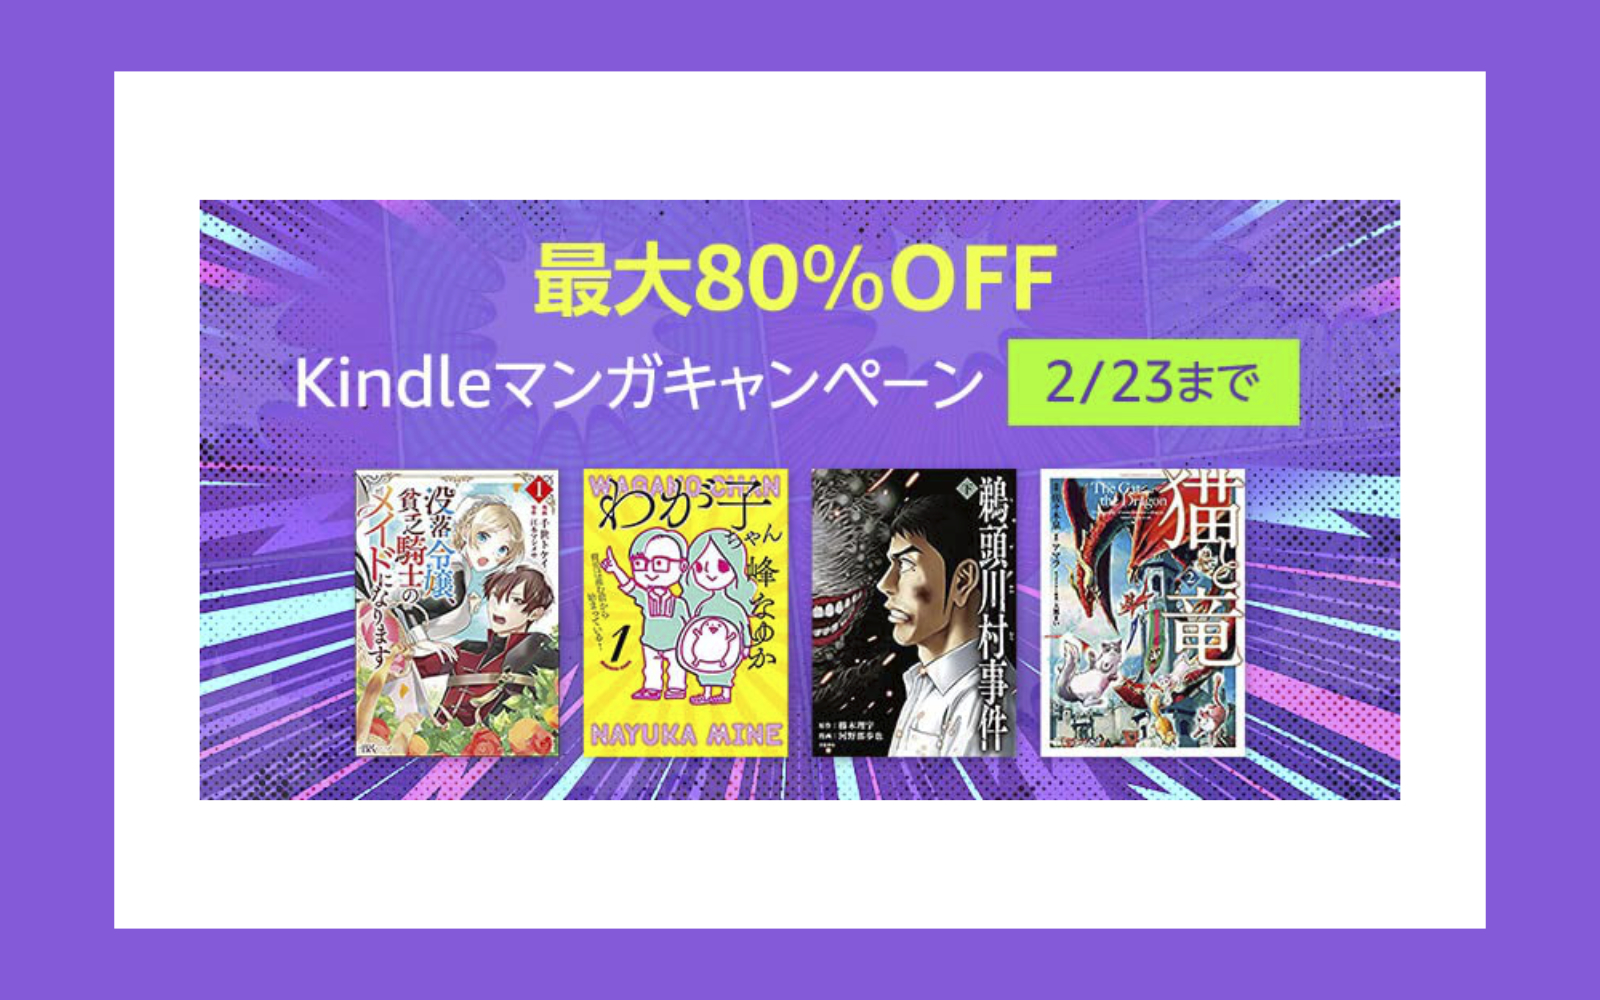 Kindle Manga 80percent off sale